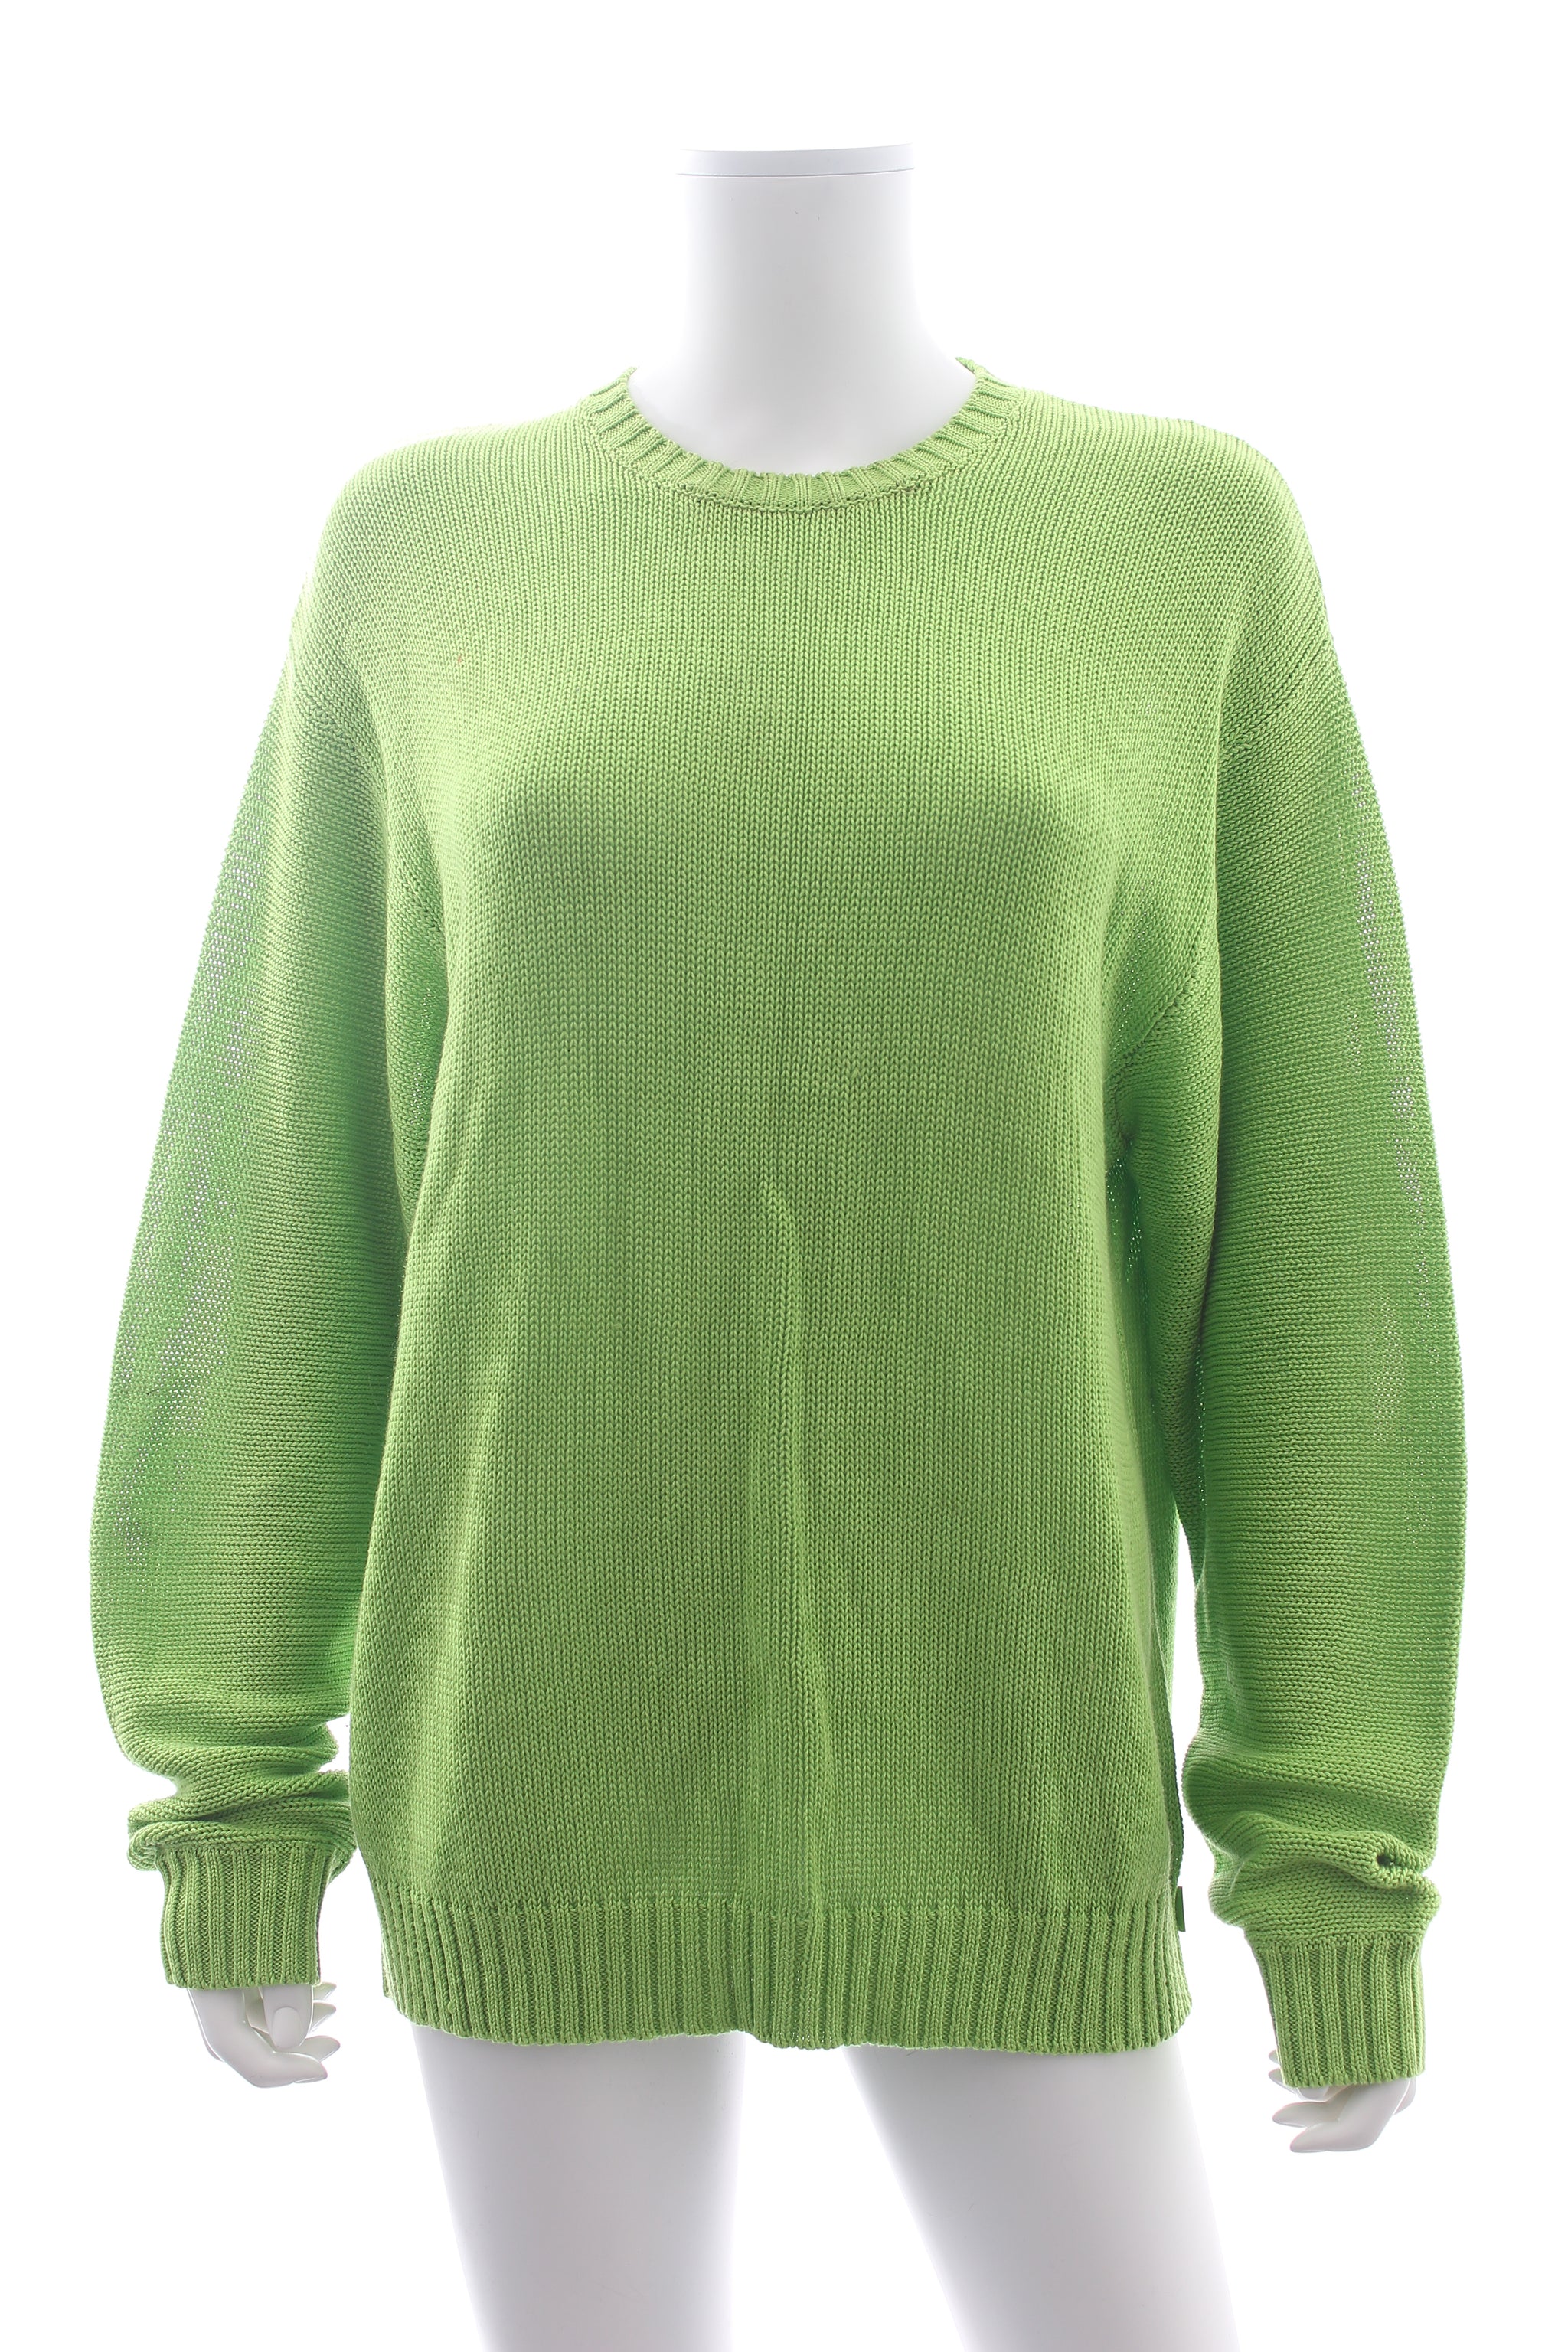 Supreme Logo Back Cotton Knit Sweater - Closet Upgrade